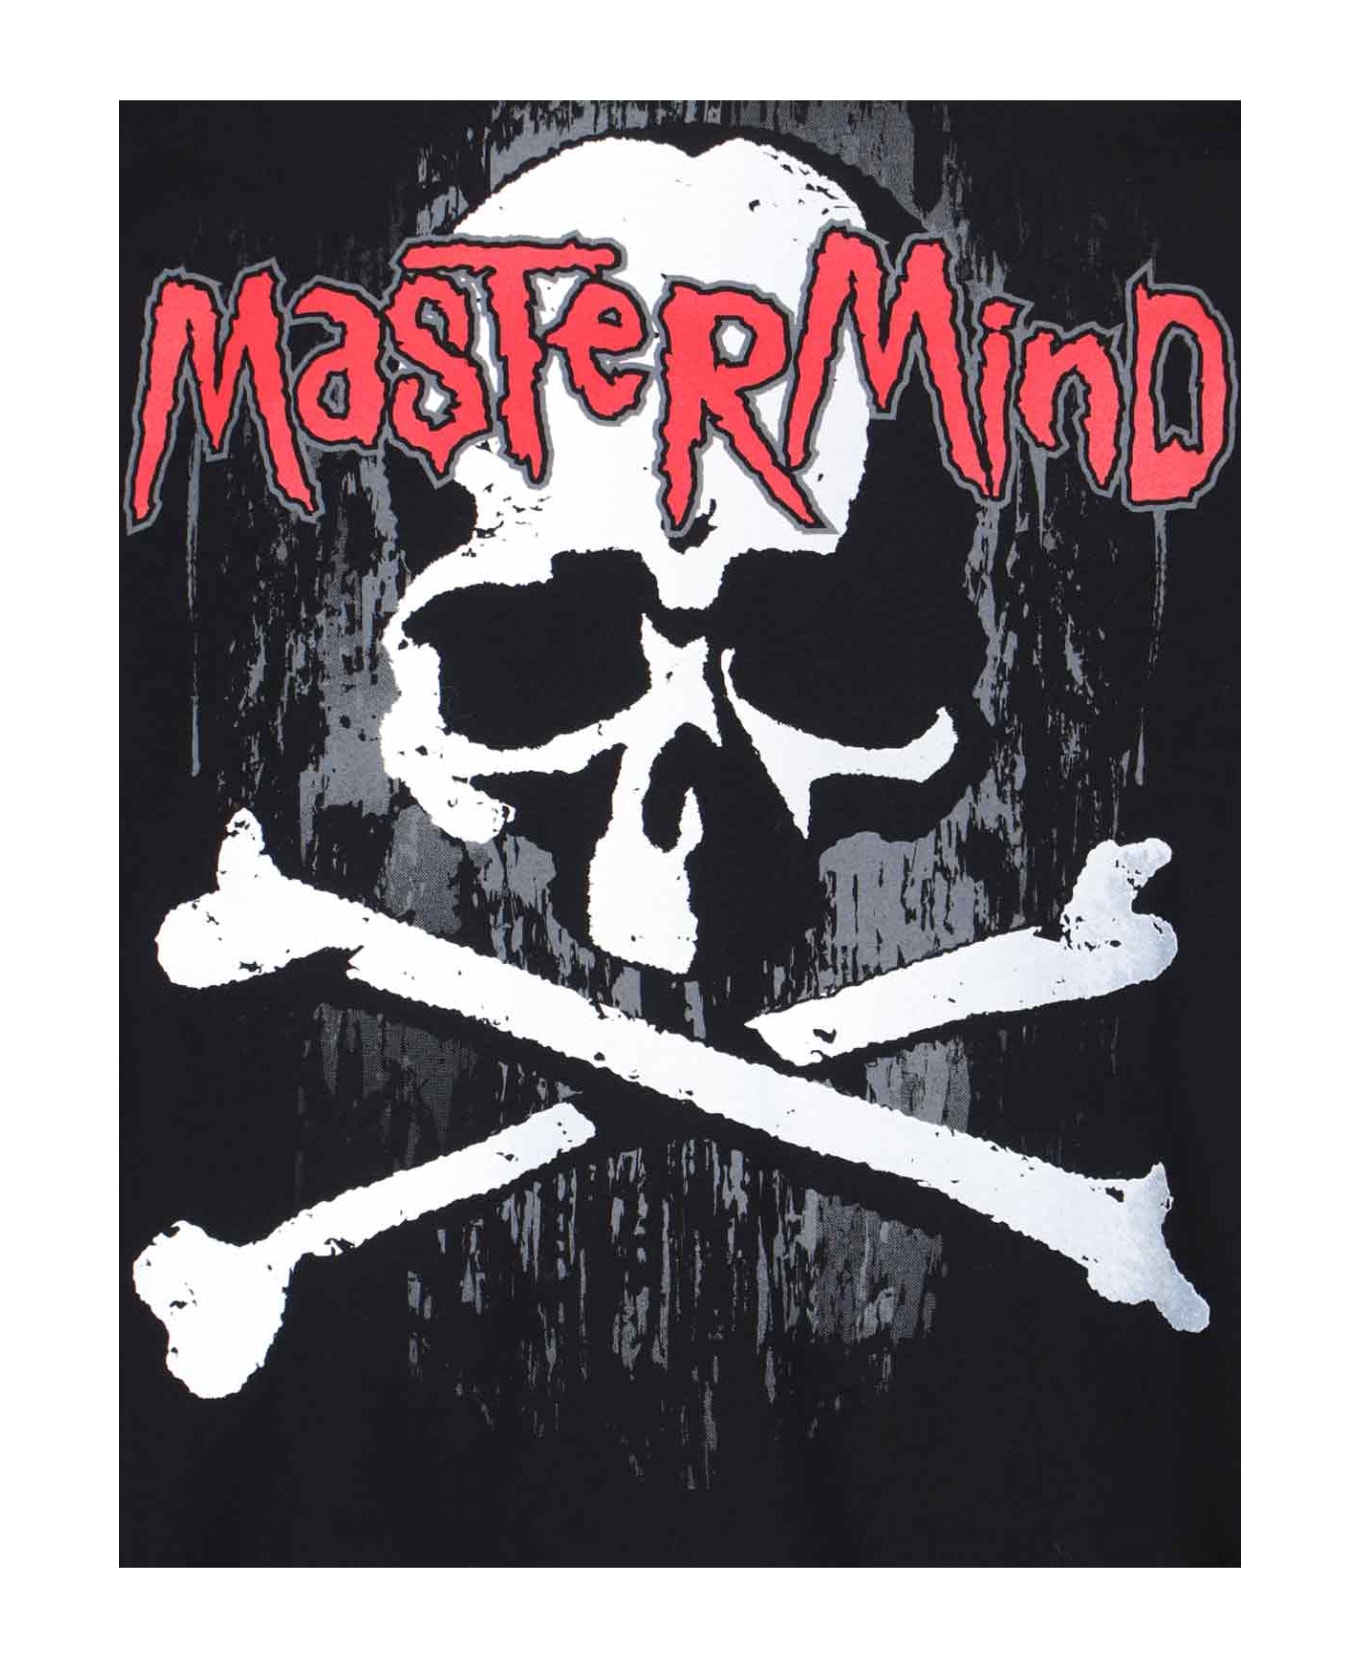 Mastermind Japan "skull Print" T-shirt - Black  